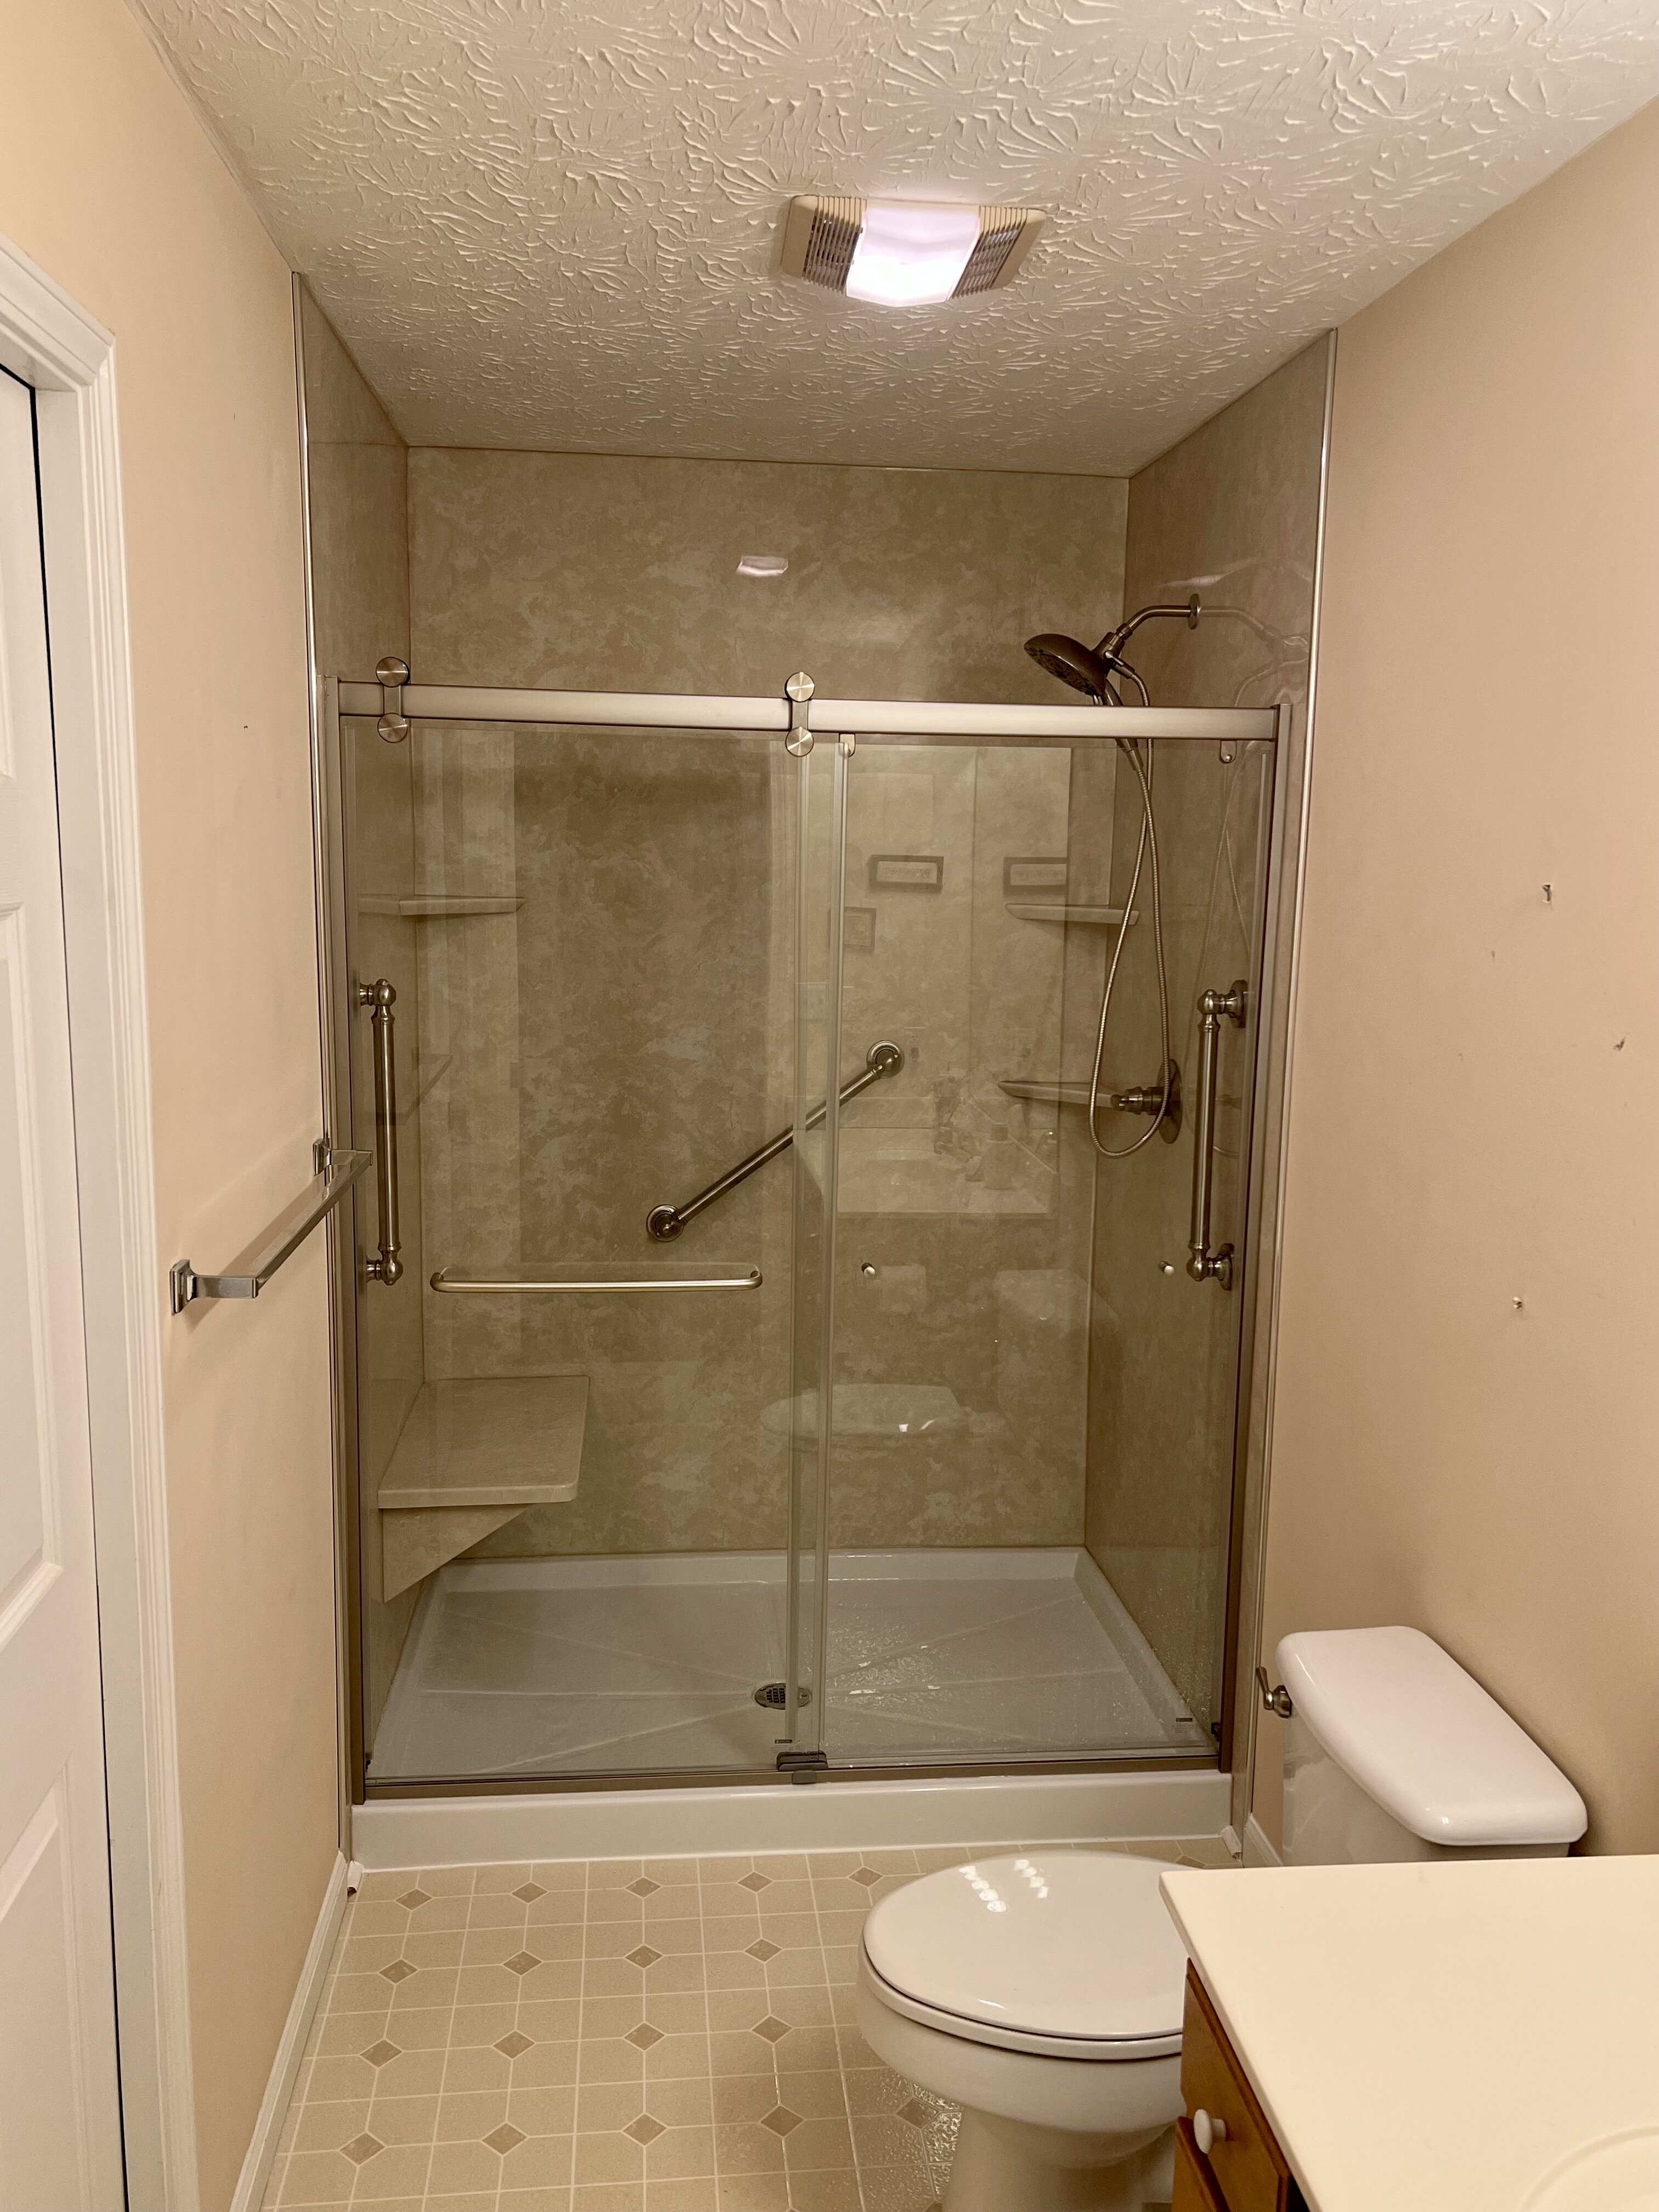 New walk in shower with custom glass doors